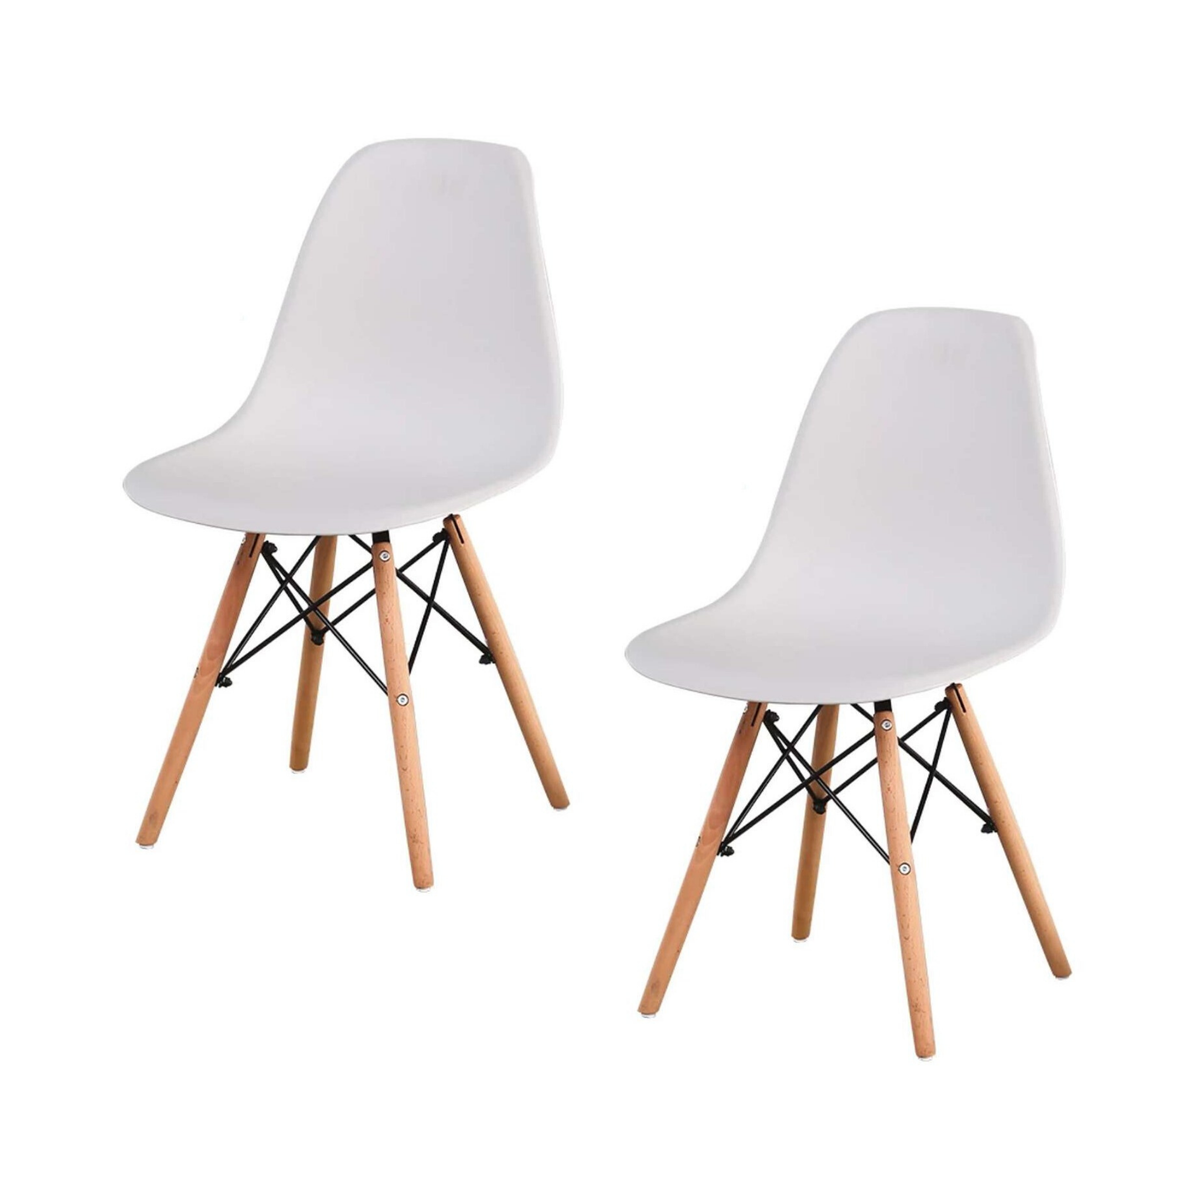 Arhaus Chairs Sale, Save 42% | jlcatj.gob.mx